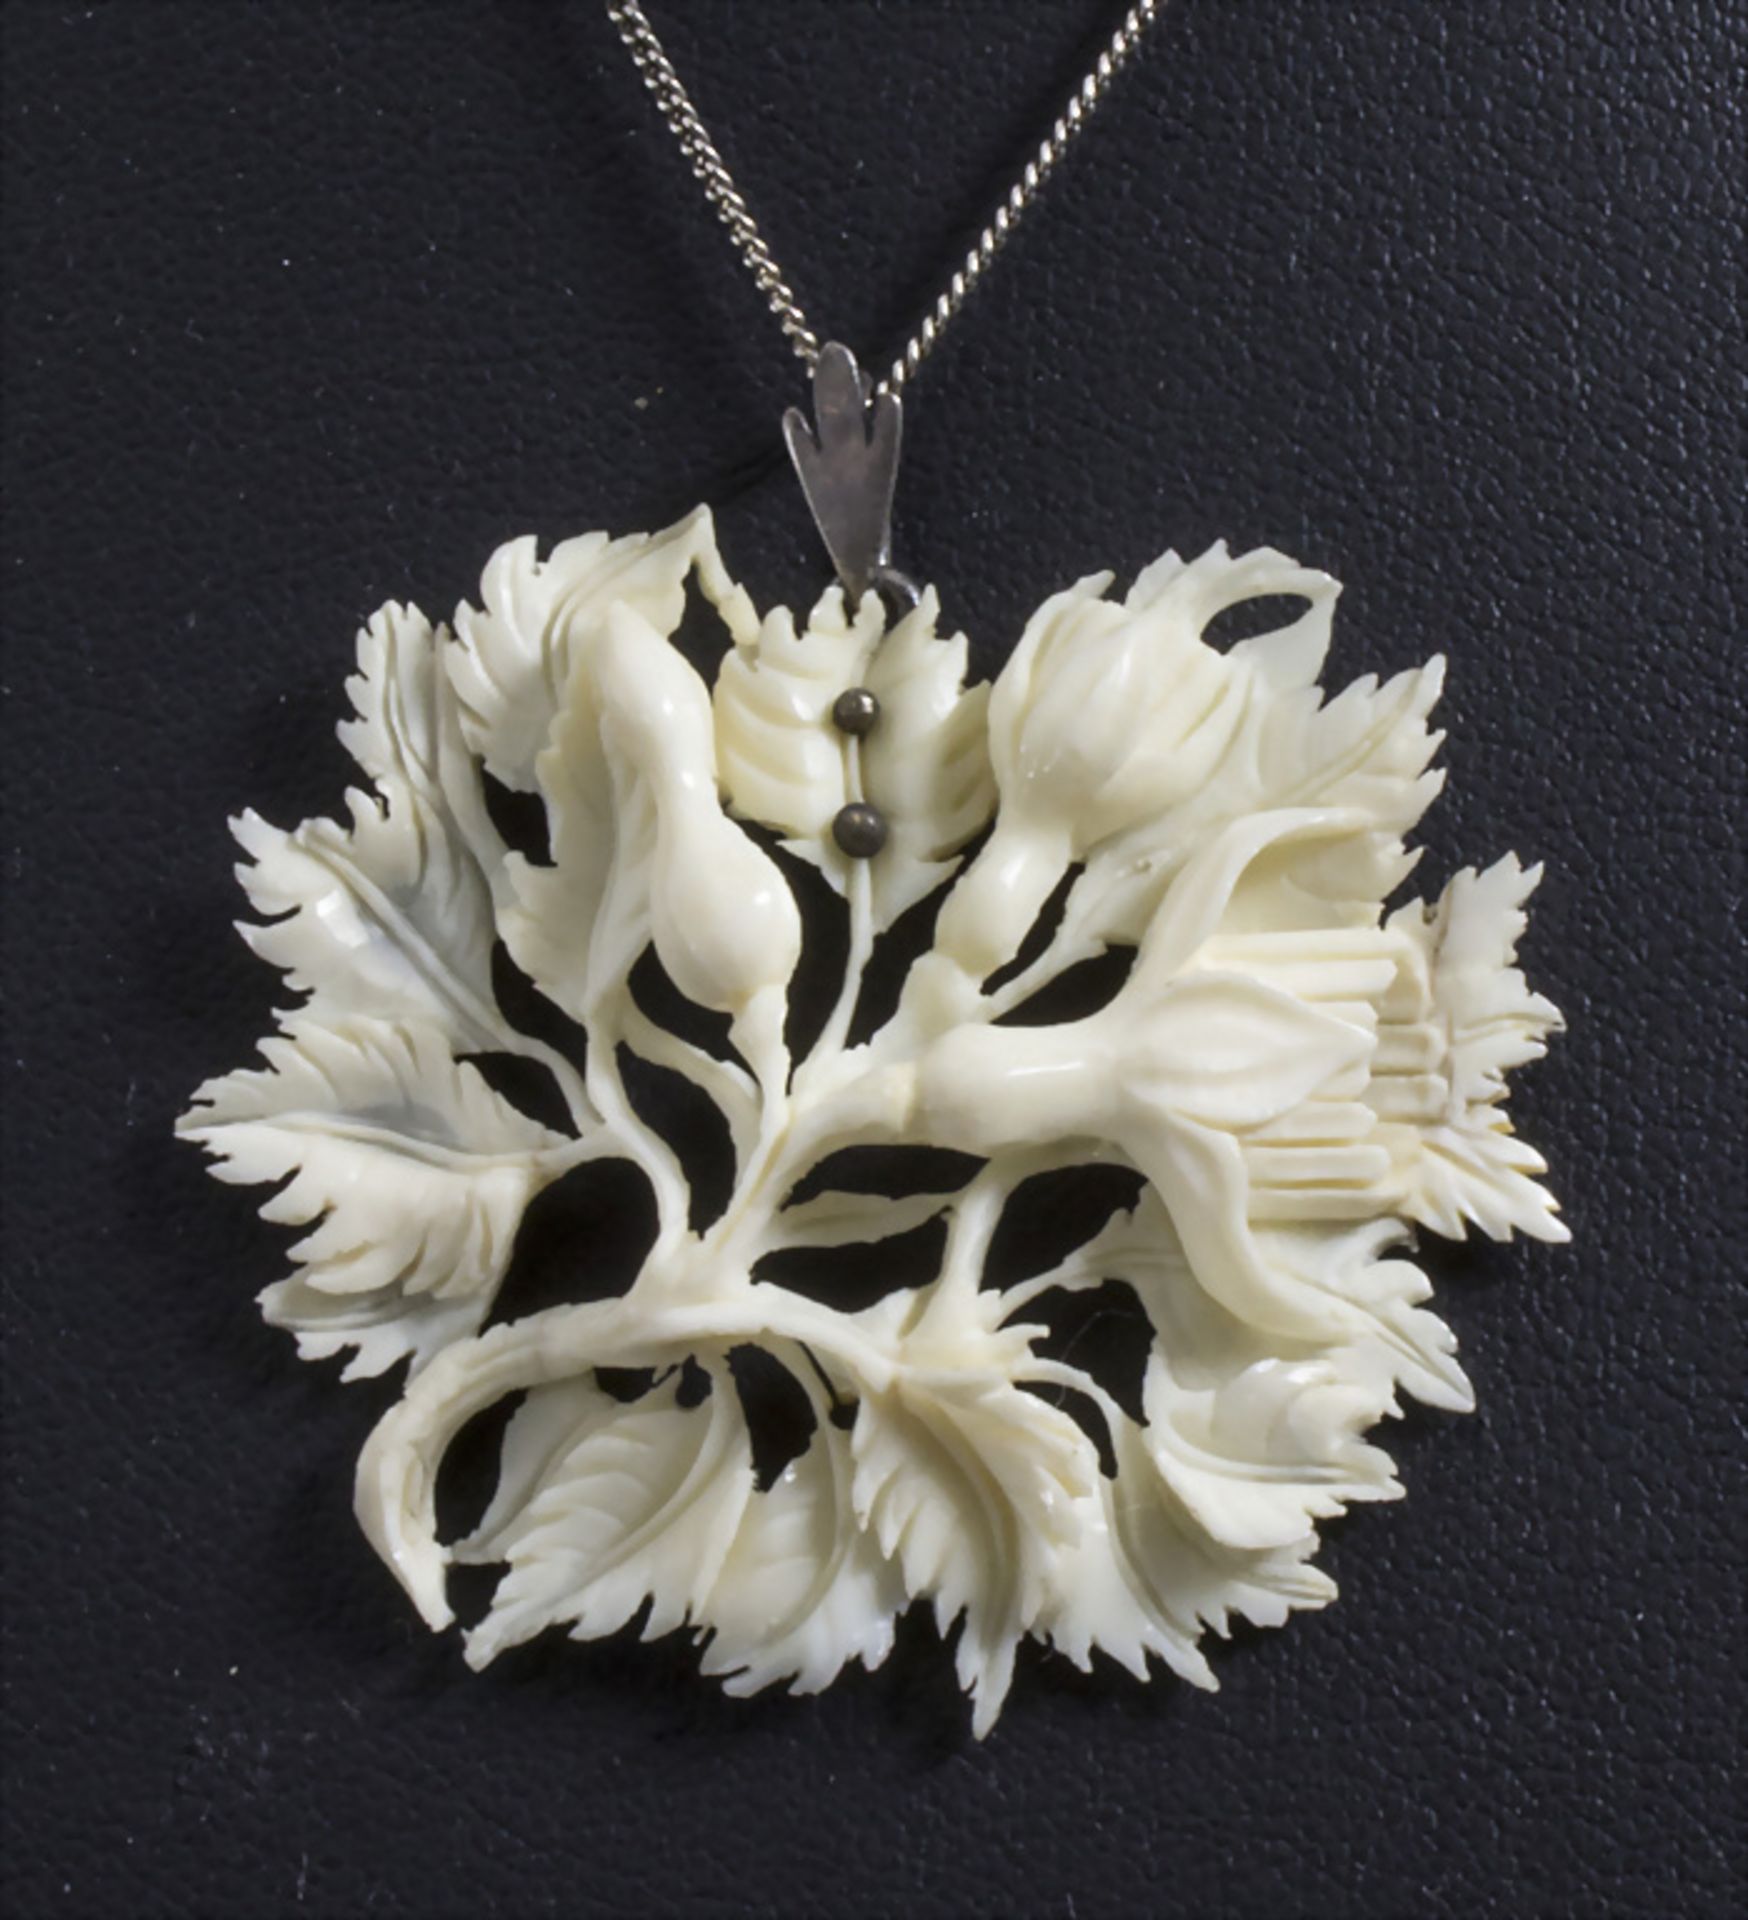 Geschnitzter Anhänger mit Nelken / A carved pendant with carnations